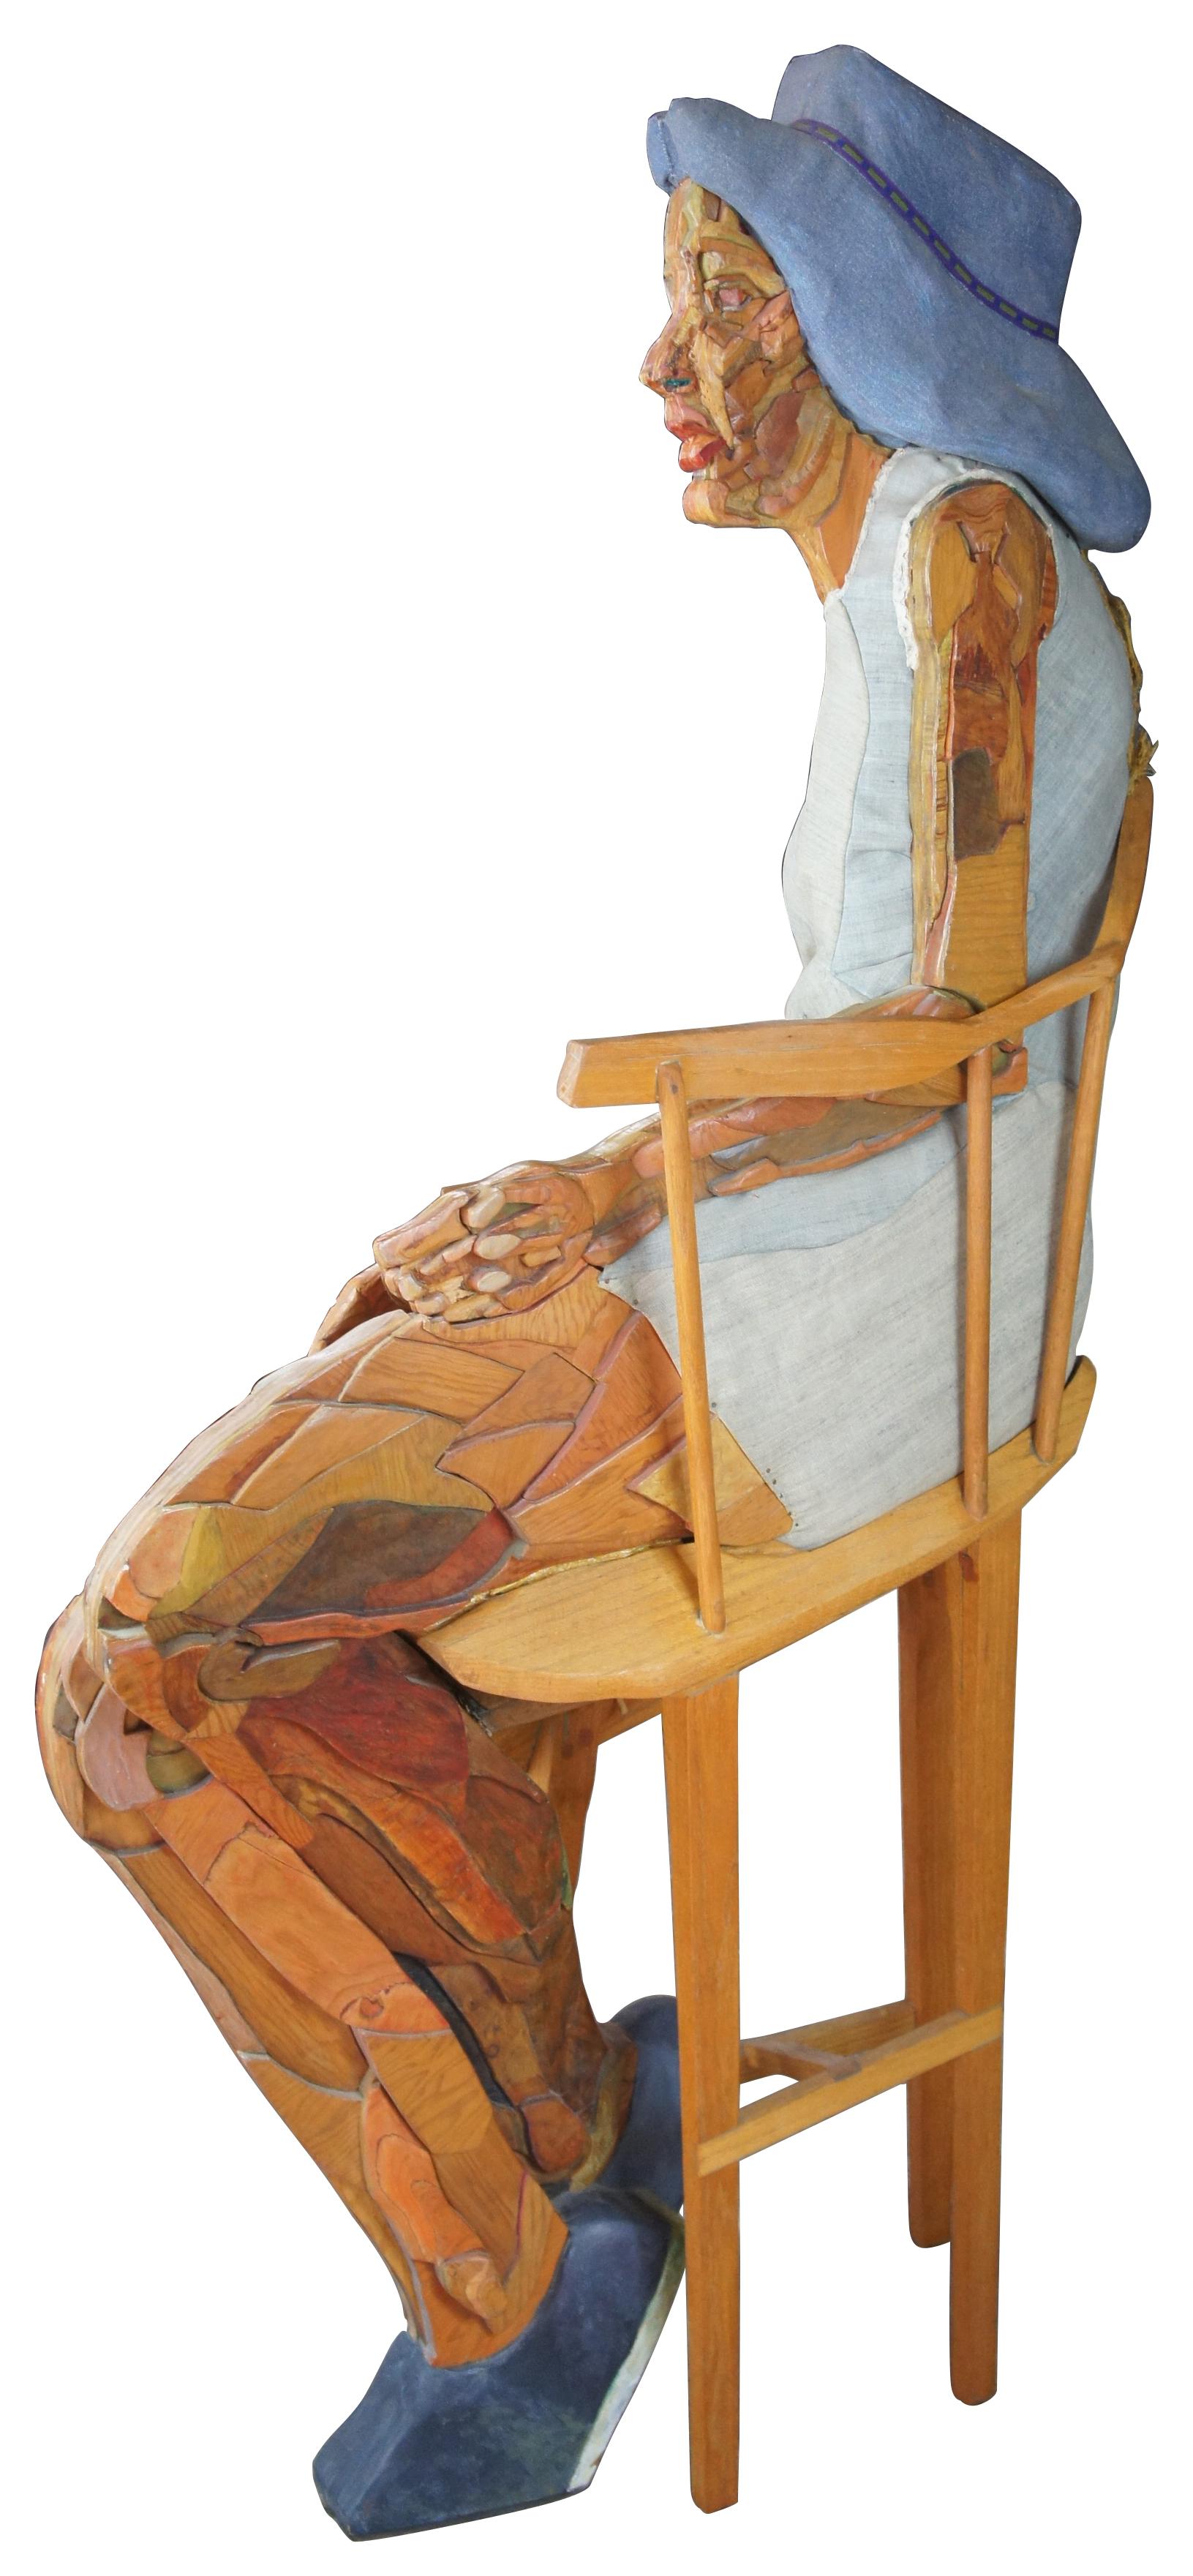 Gail von Thomas Giebink überlebensgroße Holzskulptur Figur Frau im Stuhl

